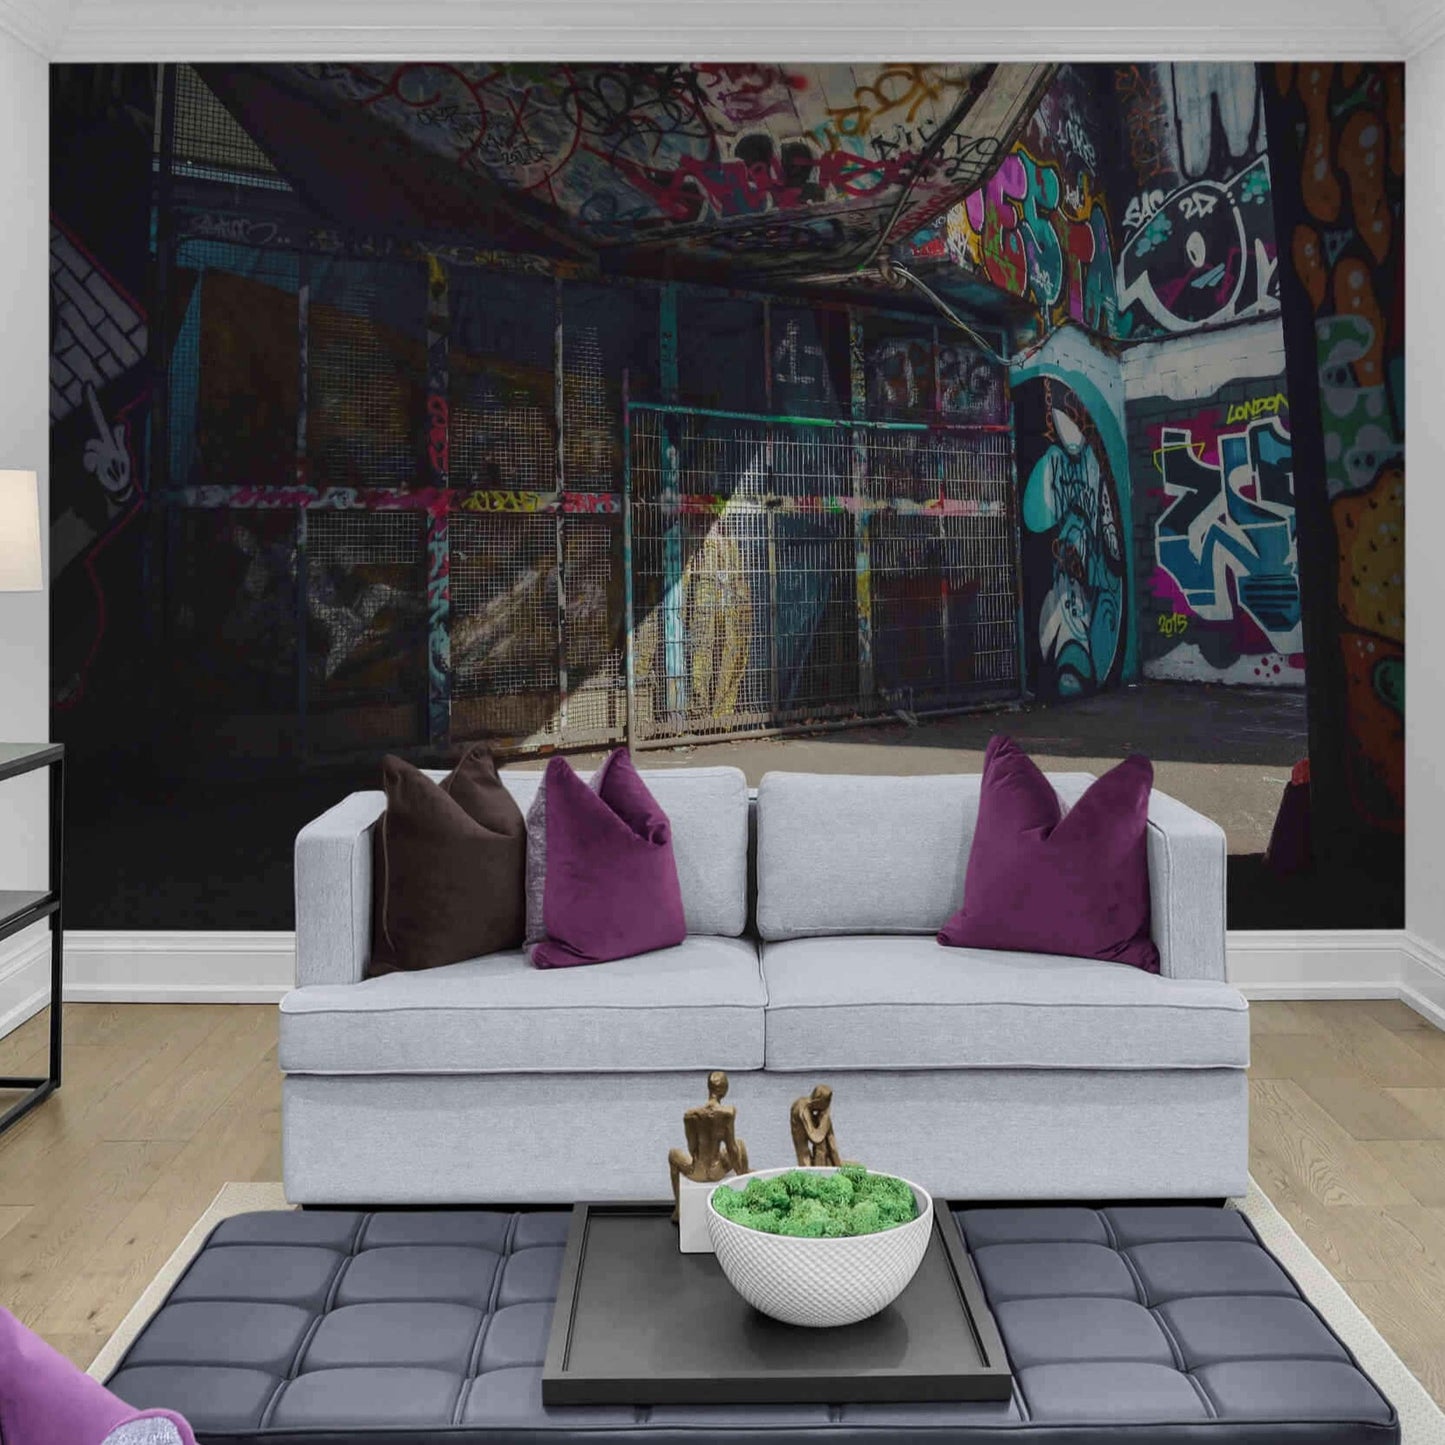 Vibrant peel and stick graffiti wallpaper transforming living room ambiance.